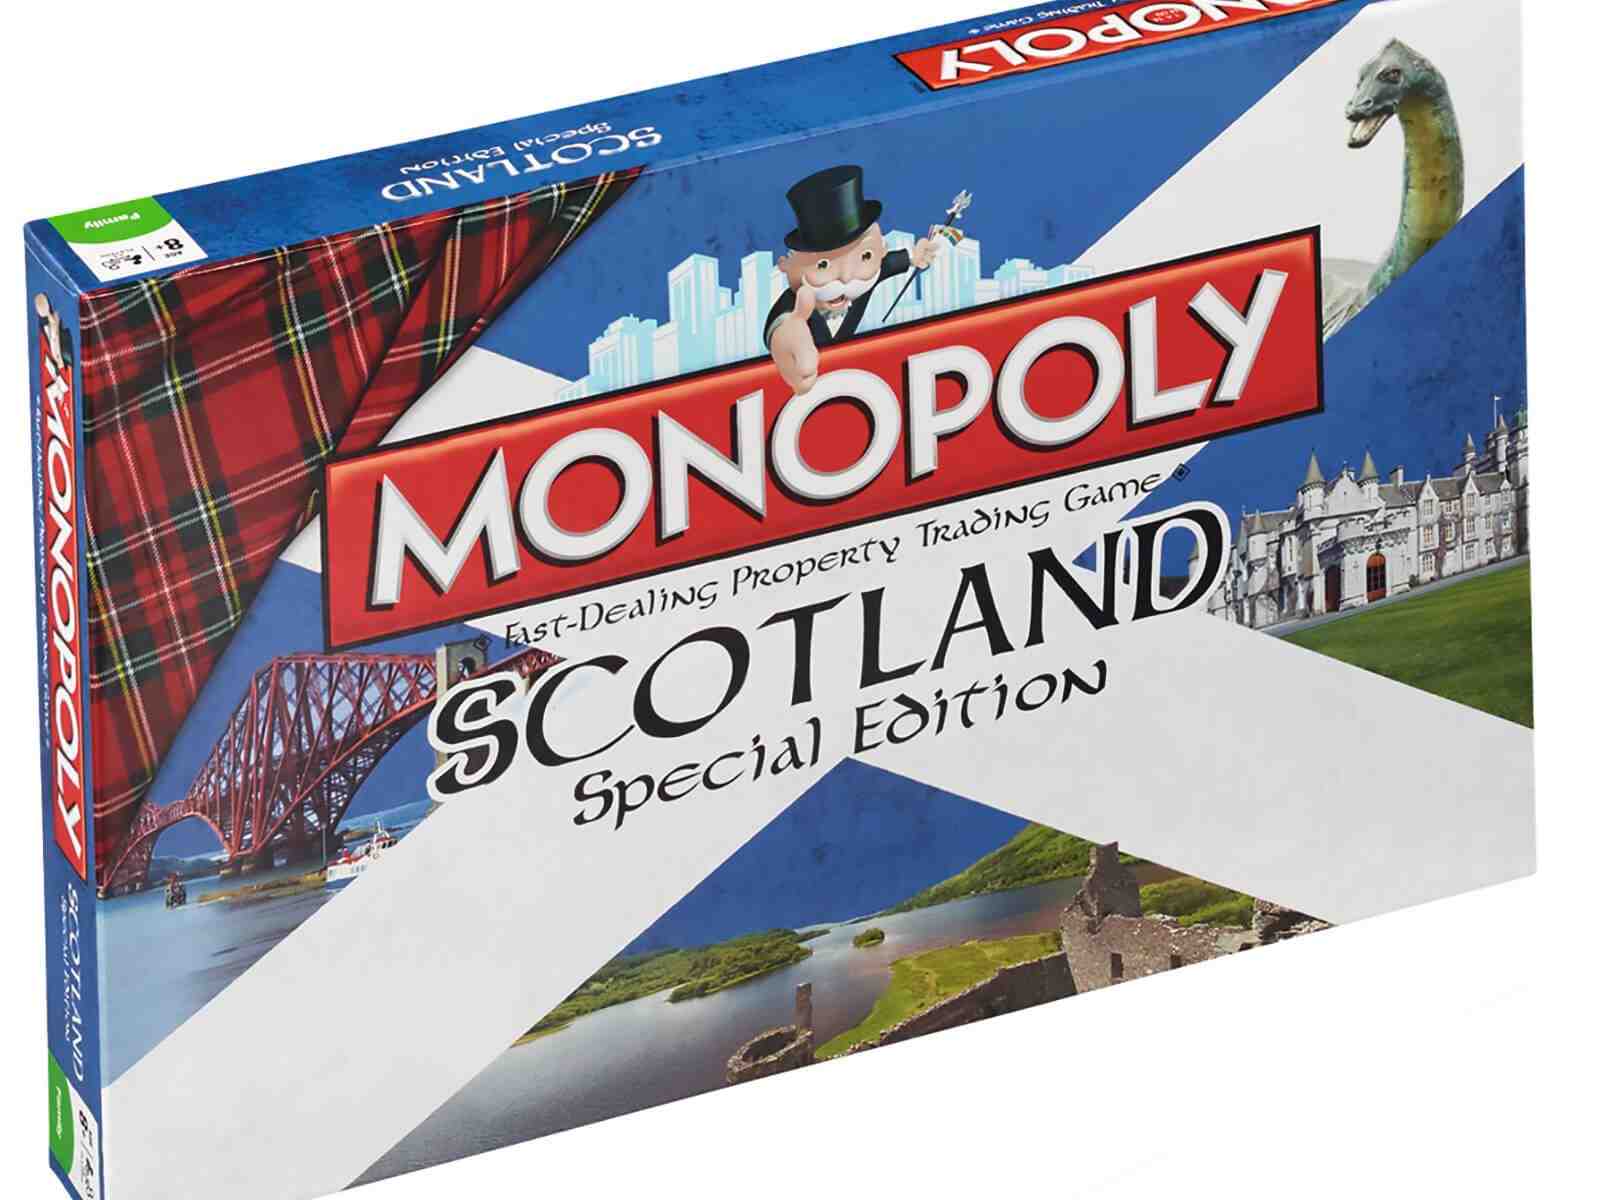 Scotland Monopoly